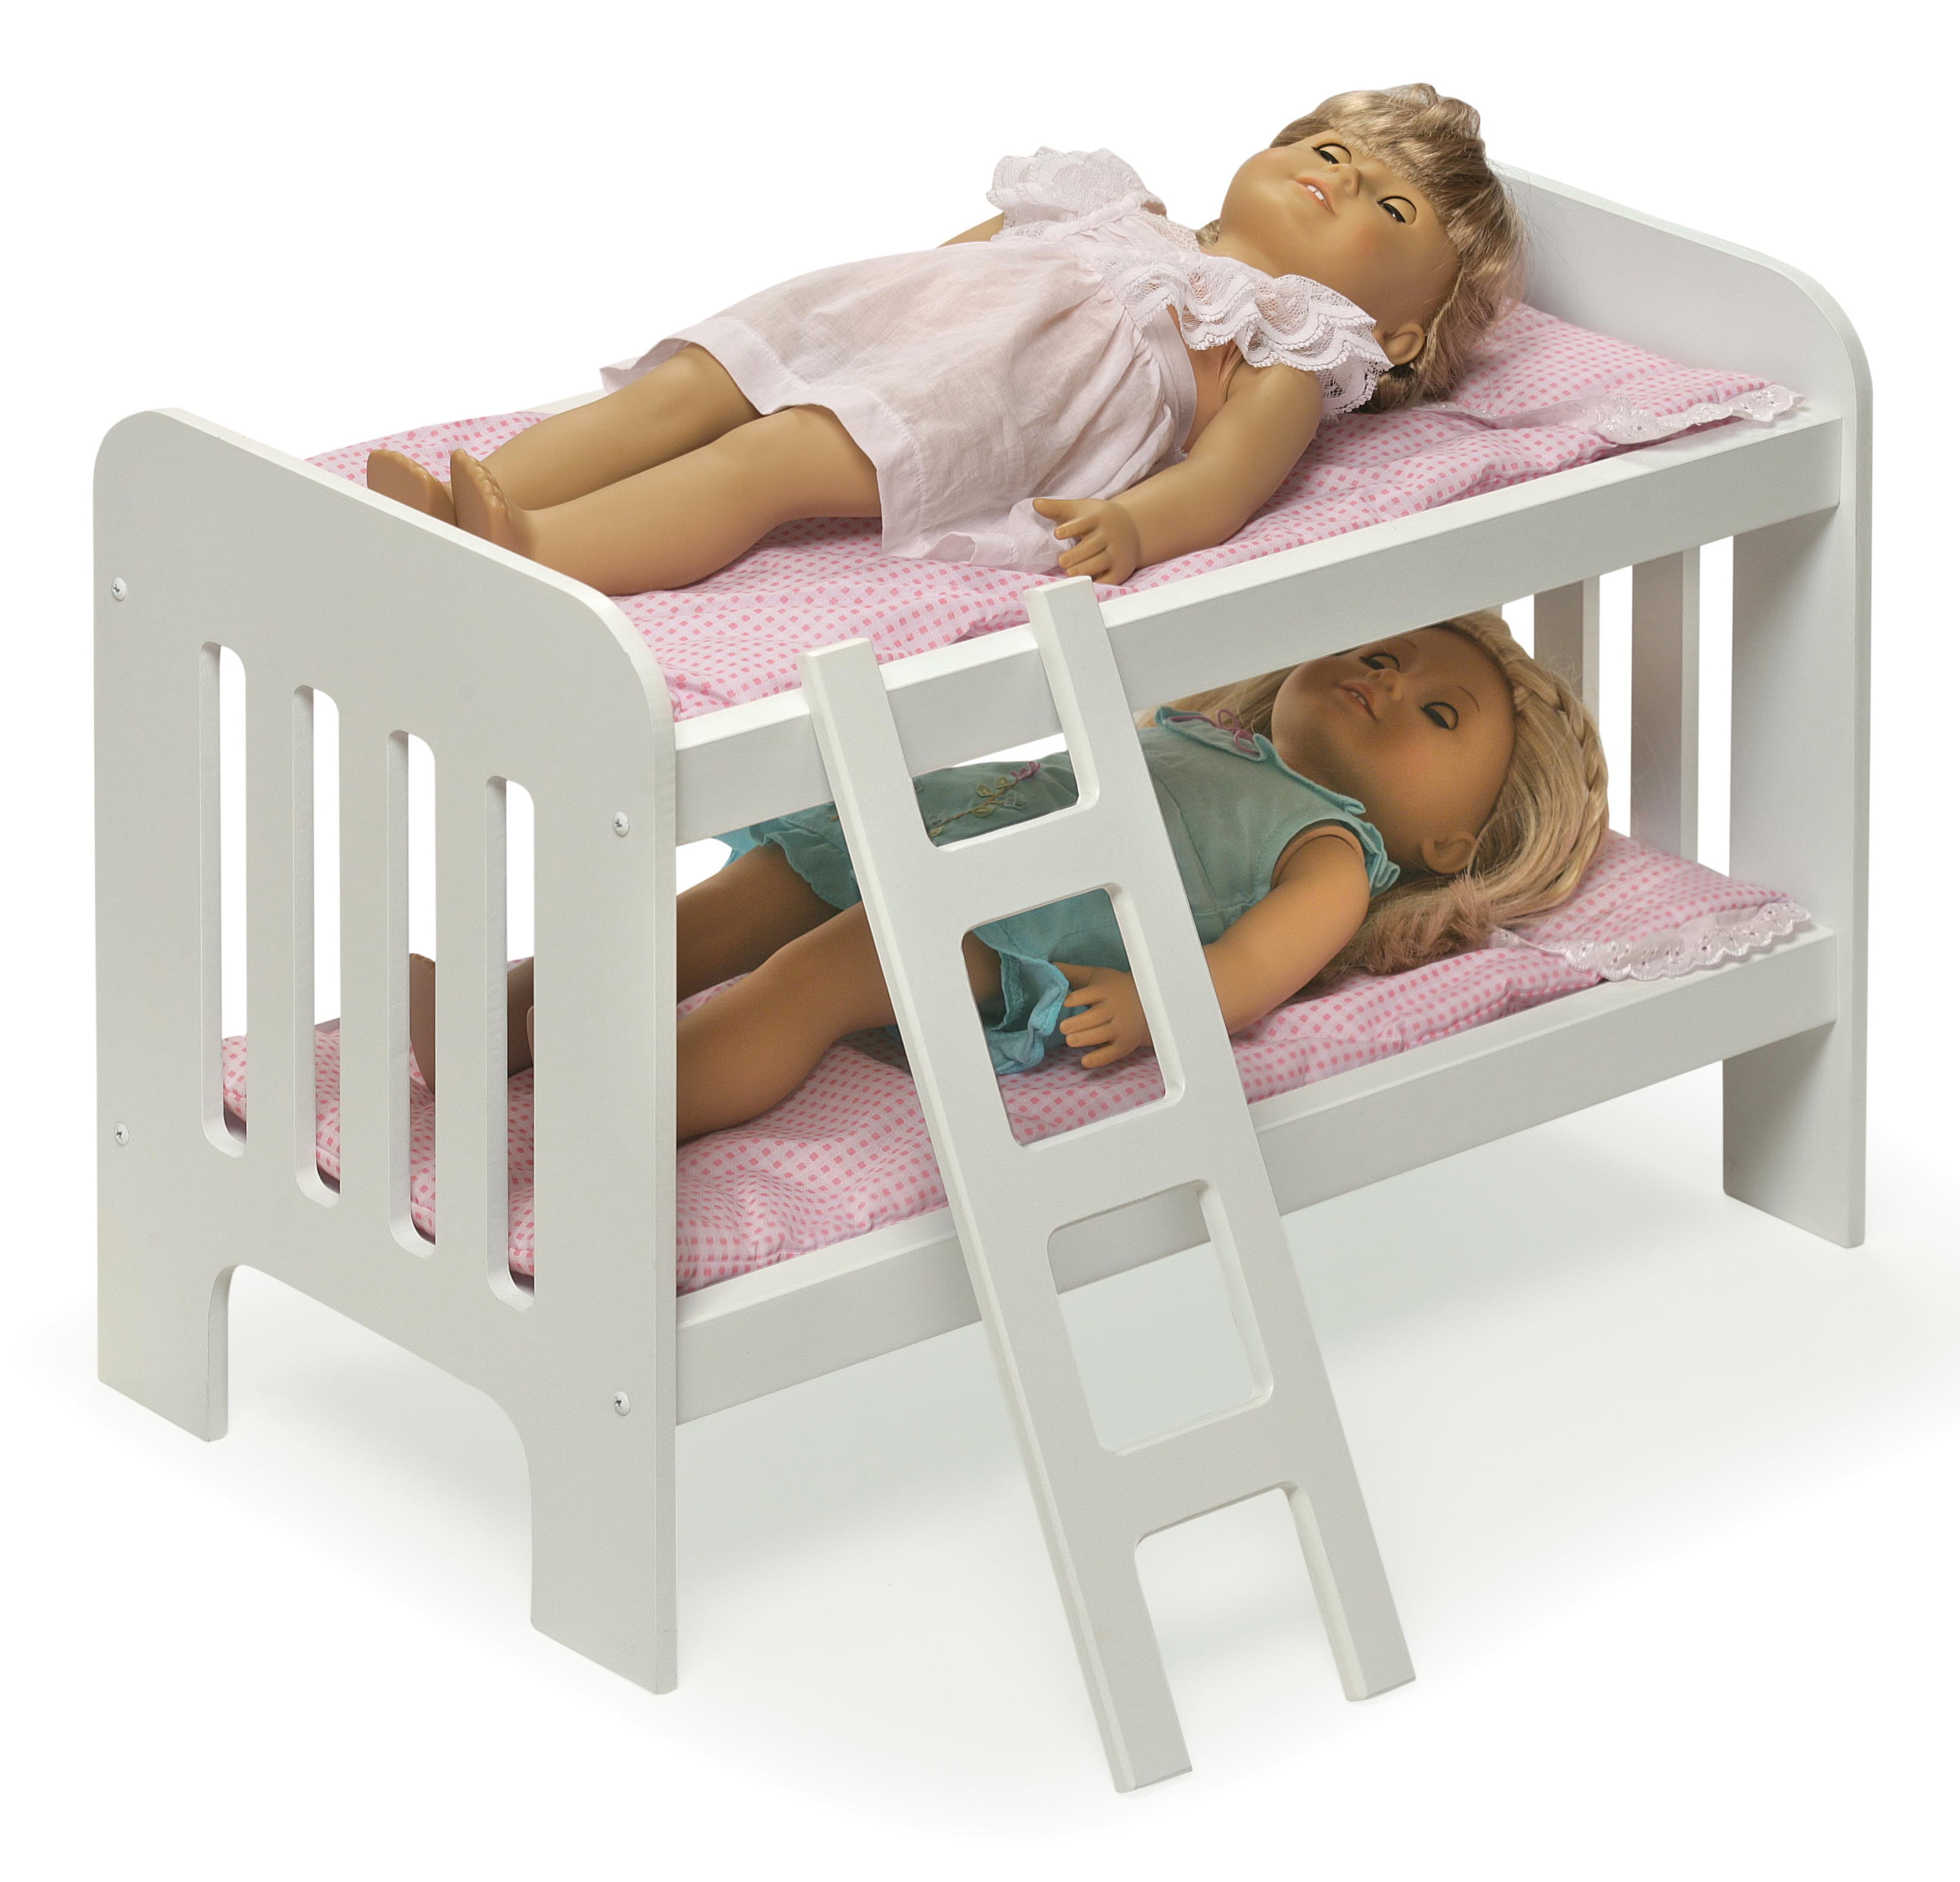 baby doll bunk beds walmart